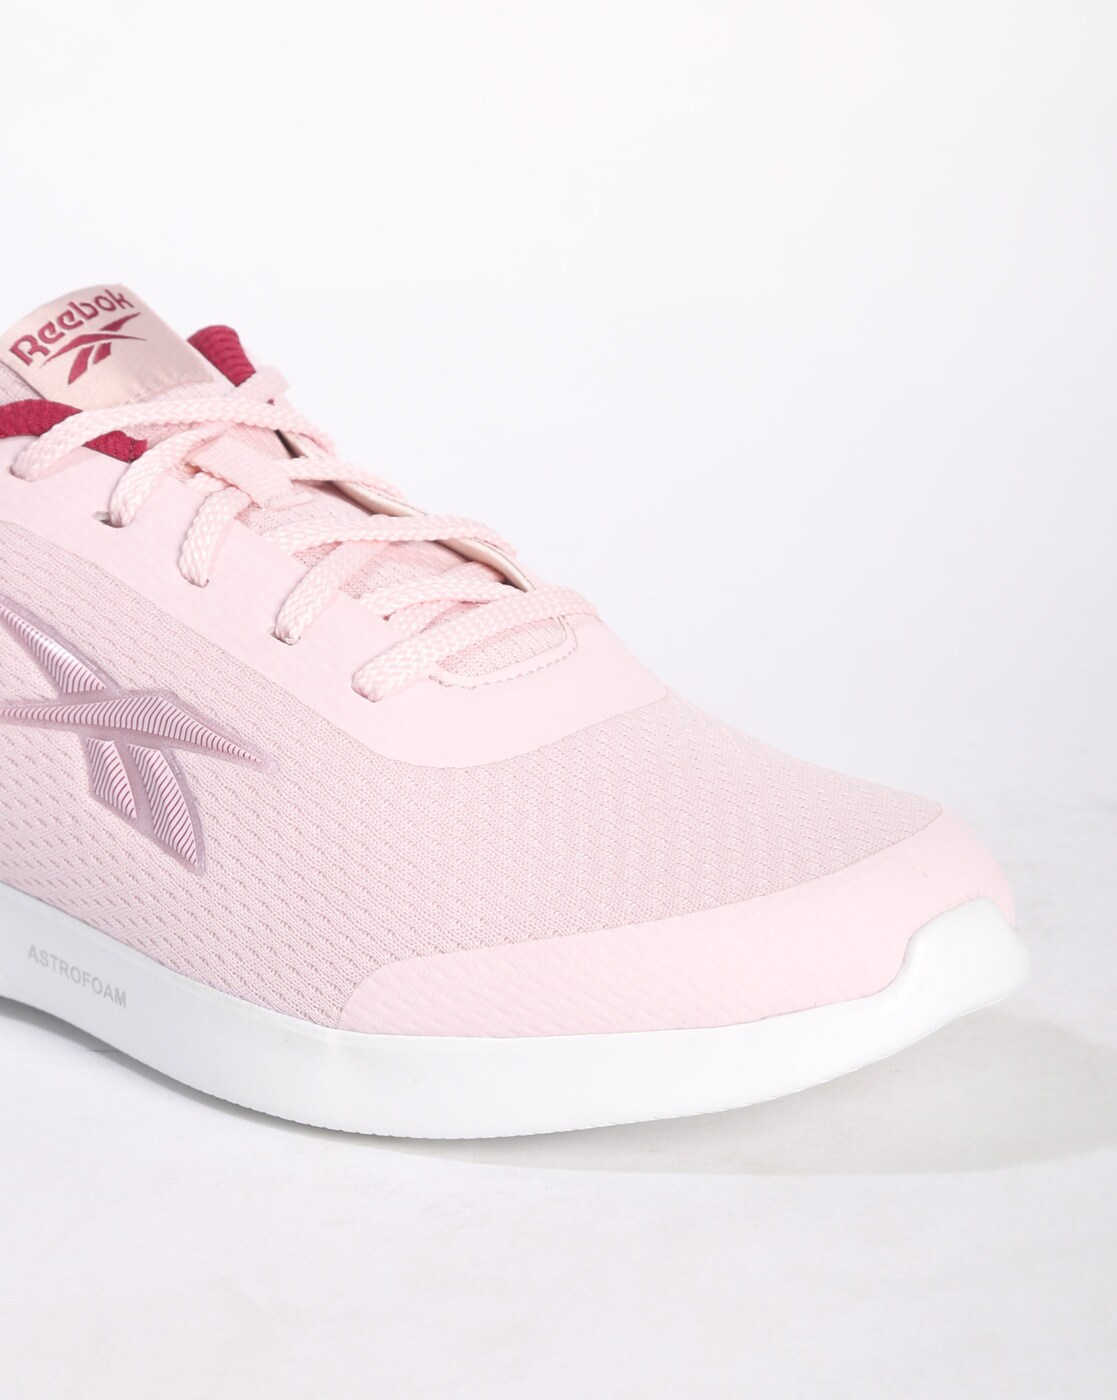 Buy Pink Sports for Women Reebok Online | Ajio.com